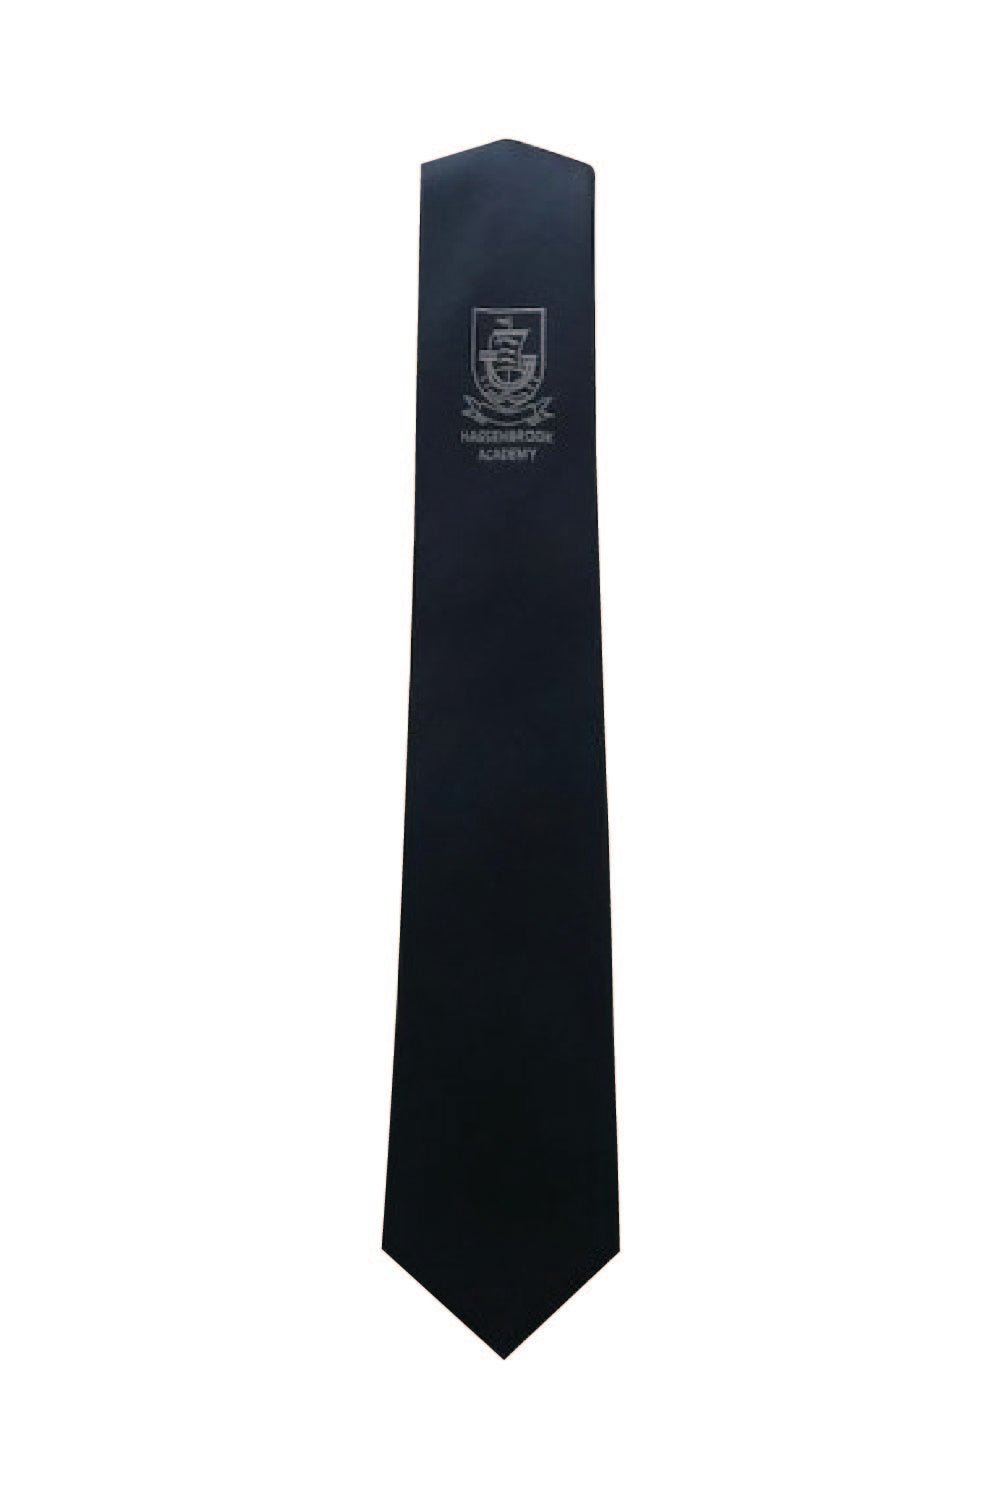 Hassenbrook School Tie - Uniformwise Schoolwear